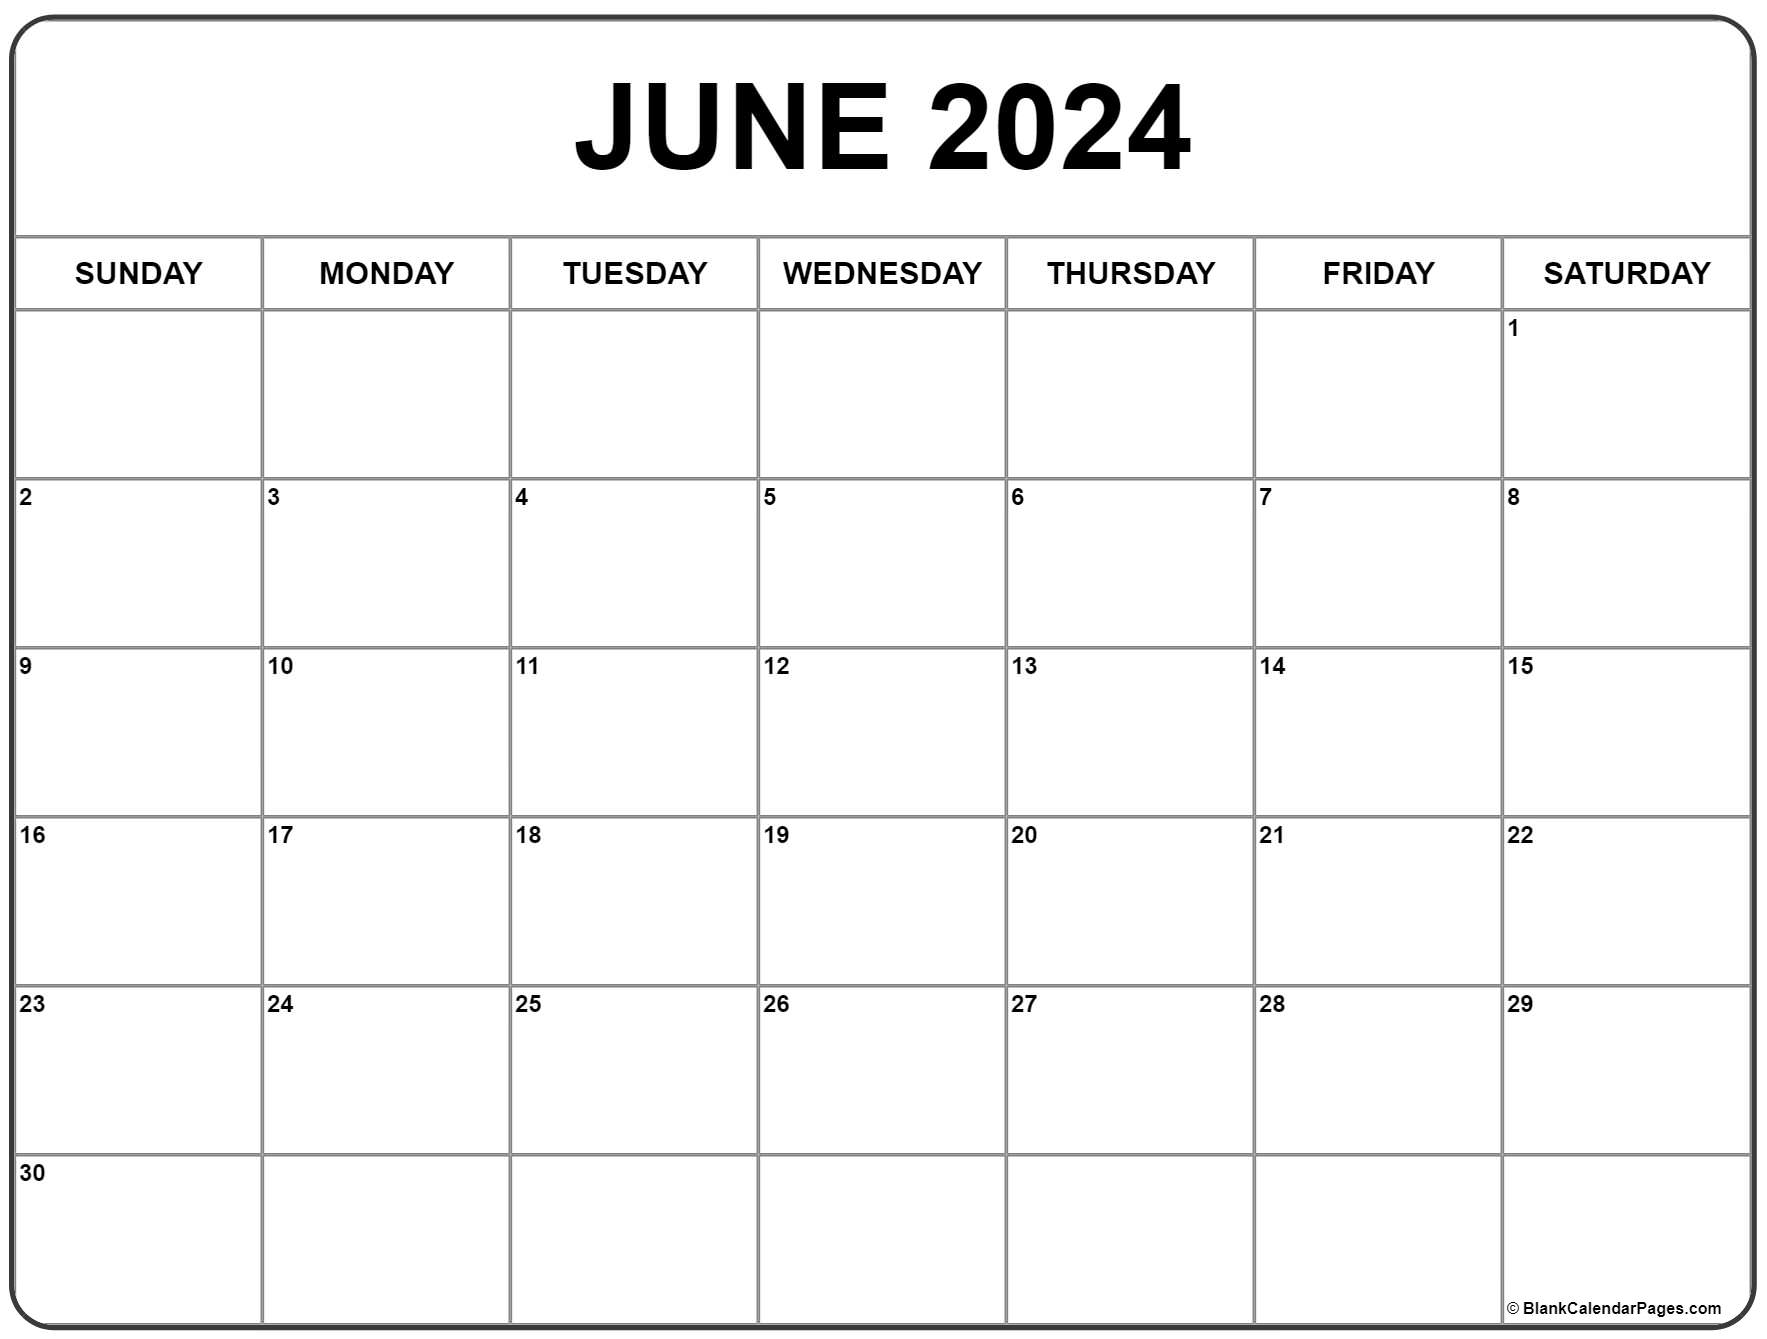 June 2024 Calendar | Free Printable Calendar for Printable Calendar Month June 2024